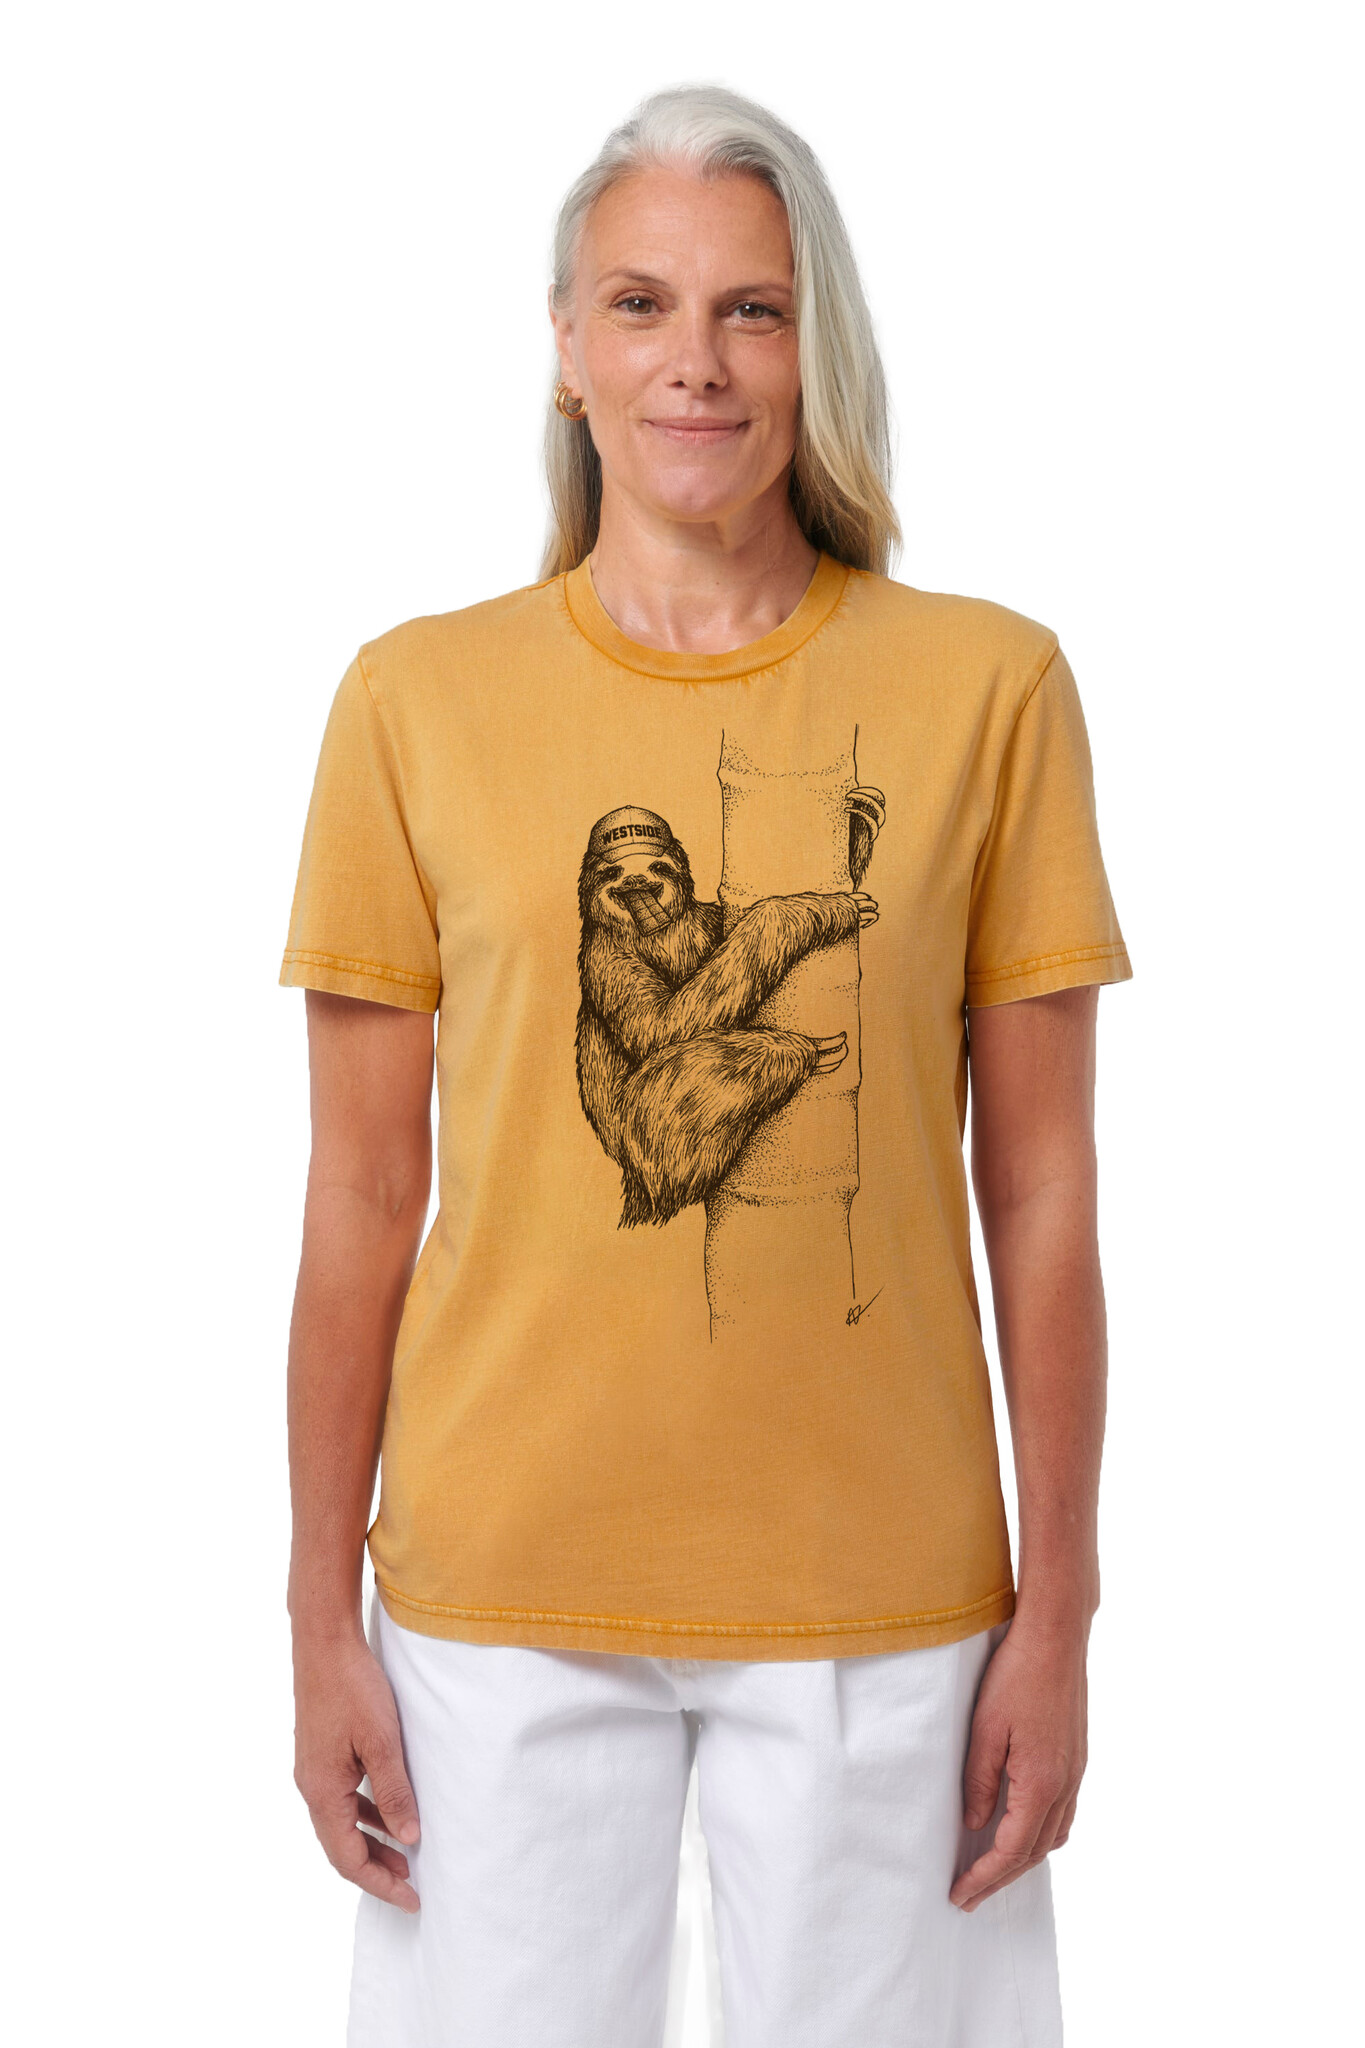 Chocolazy Sloth T-shirt - Vintage